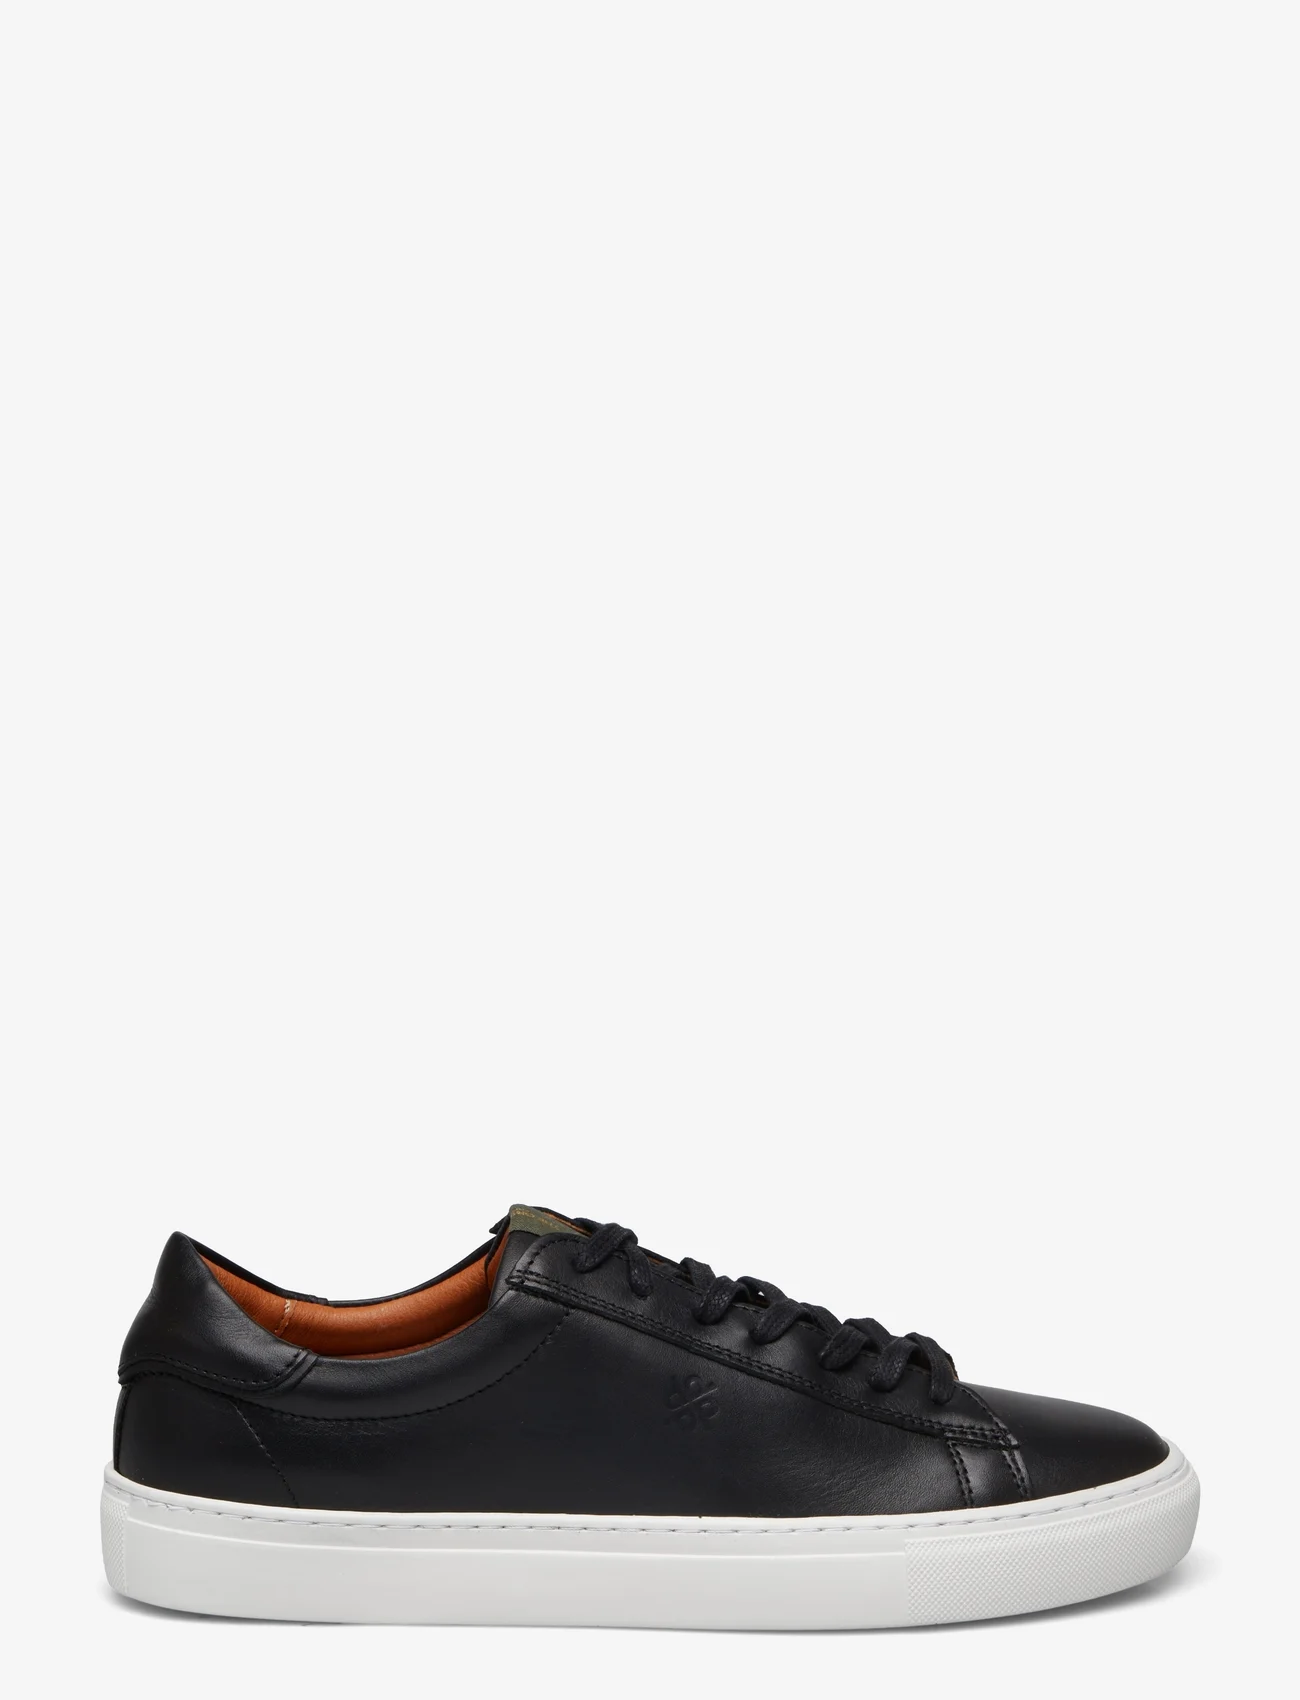 Playboy Footwear - Henri - lav ankel - black leather - 1